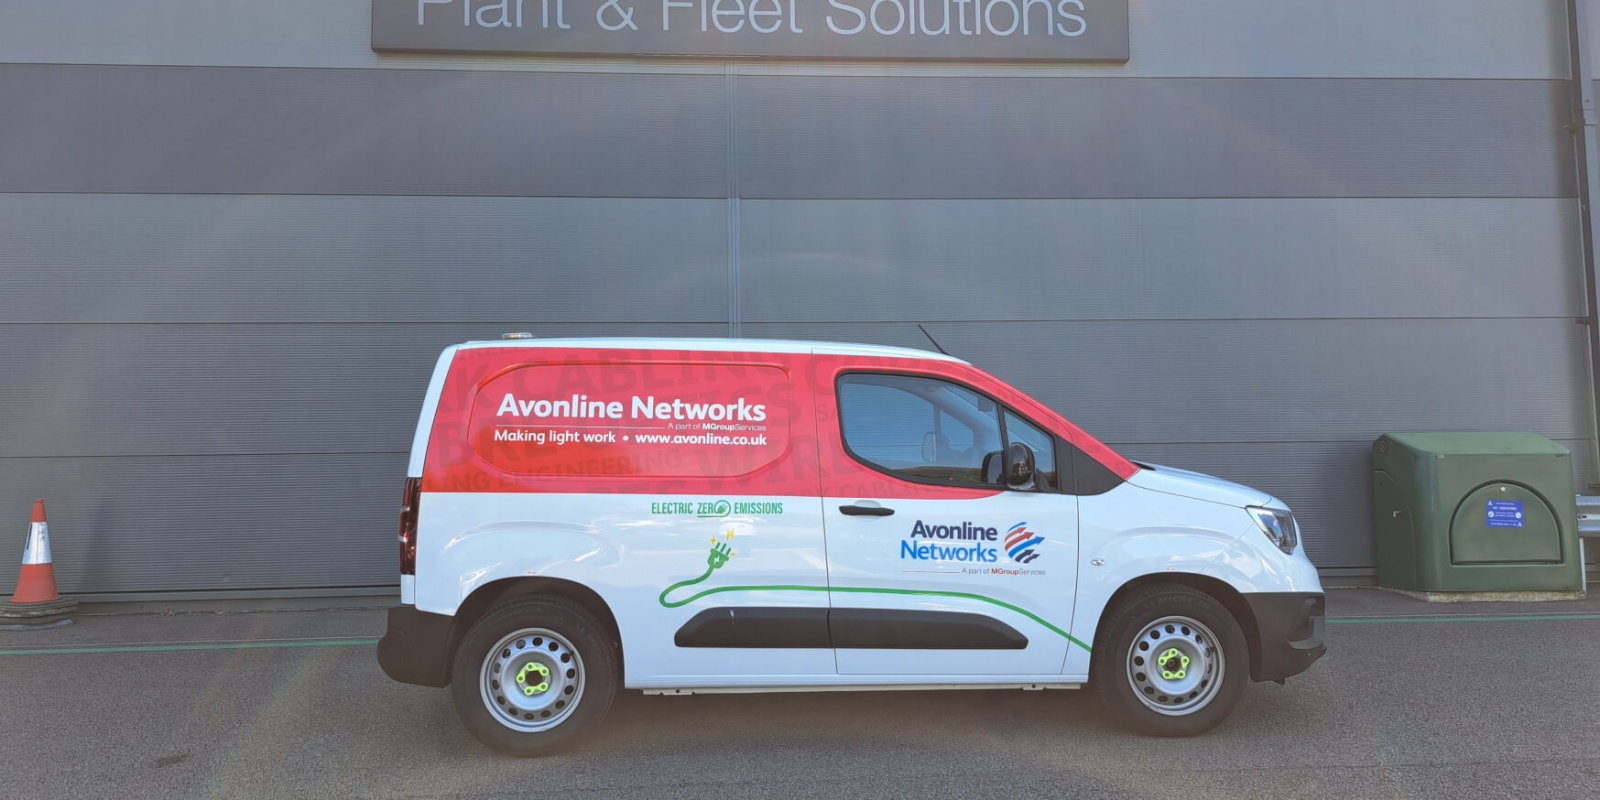  Avonline Networks starts to build an EV Fleet